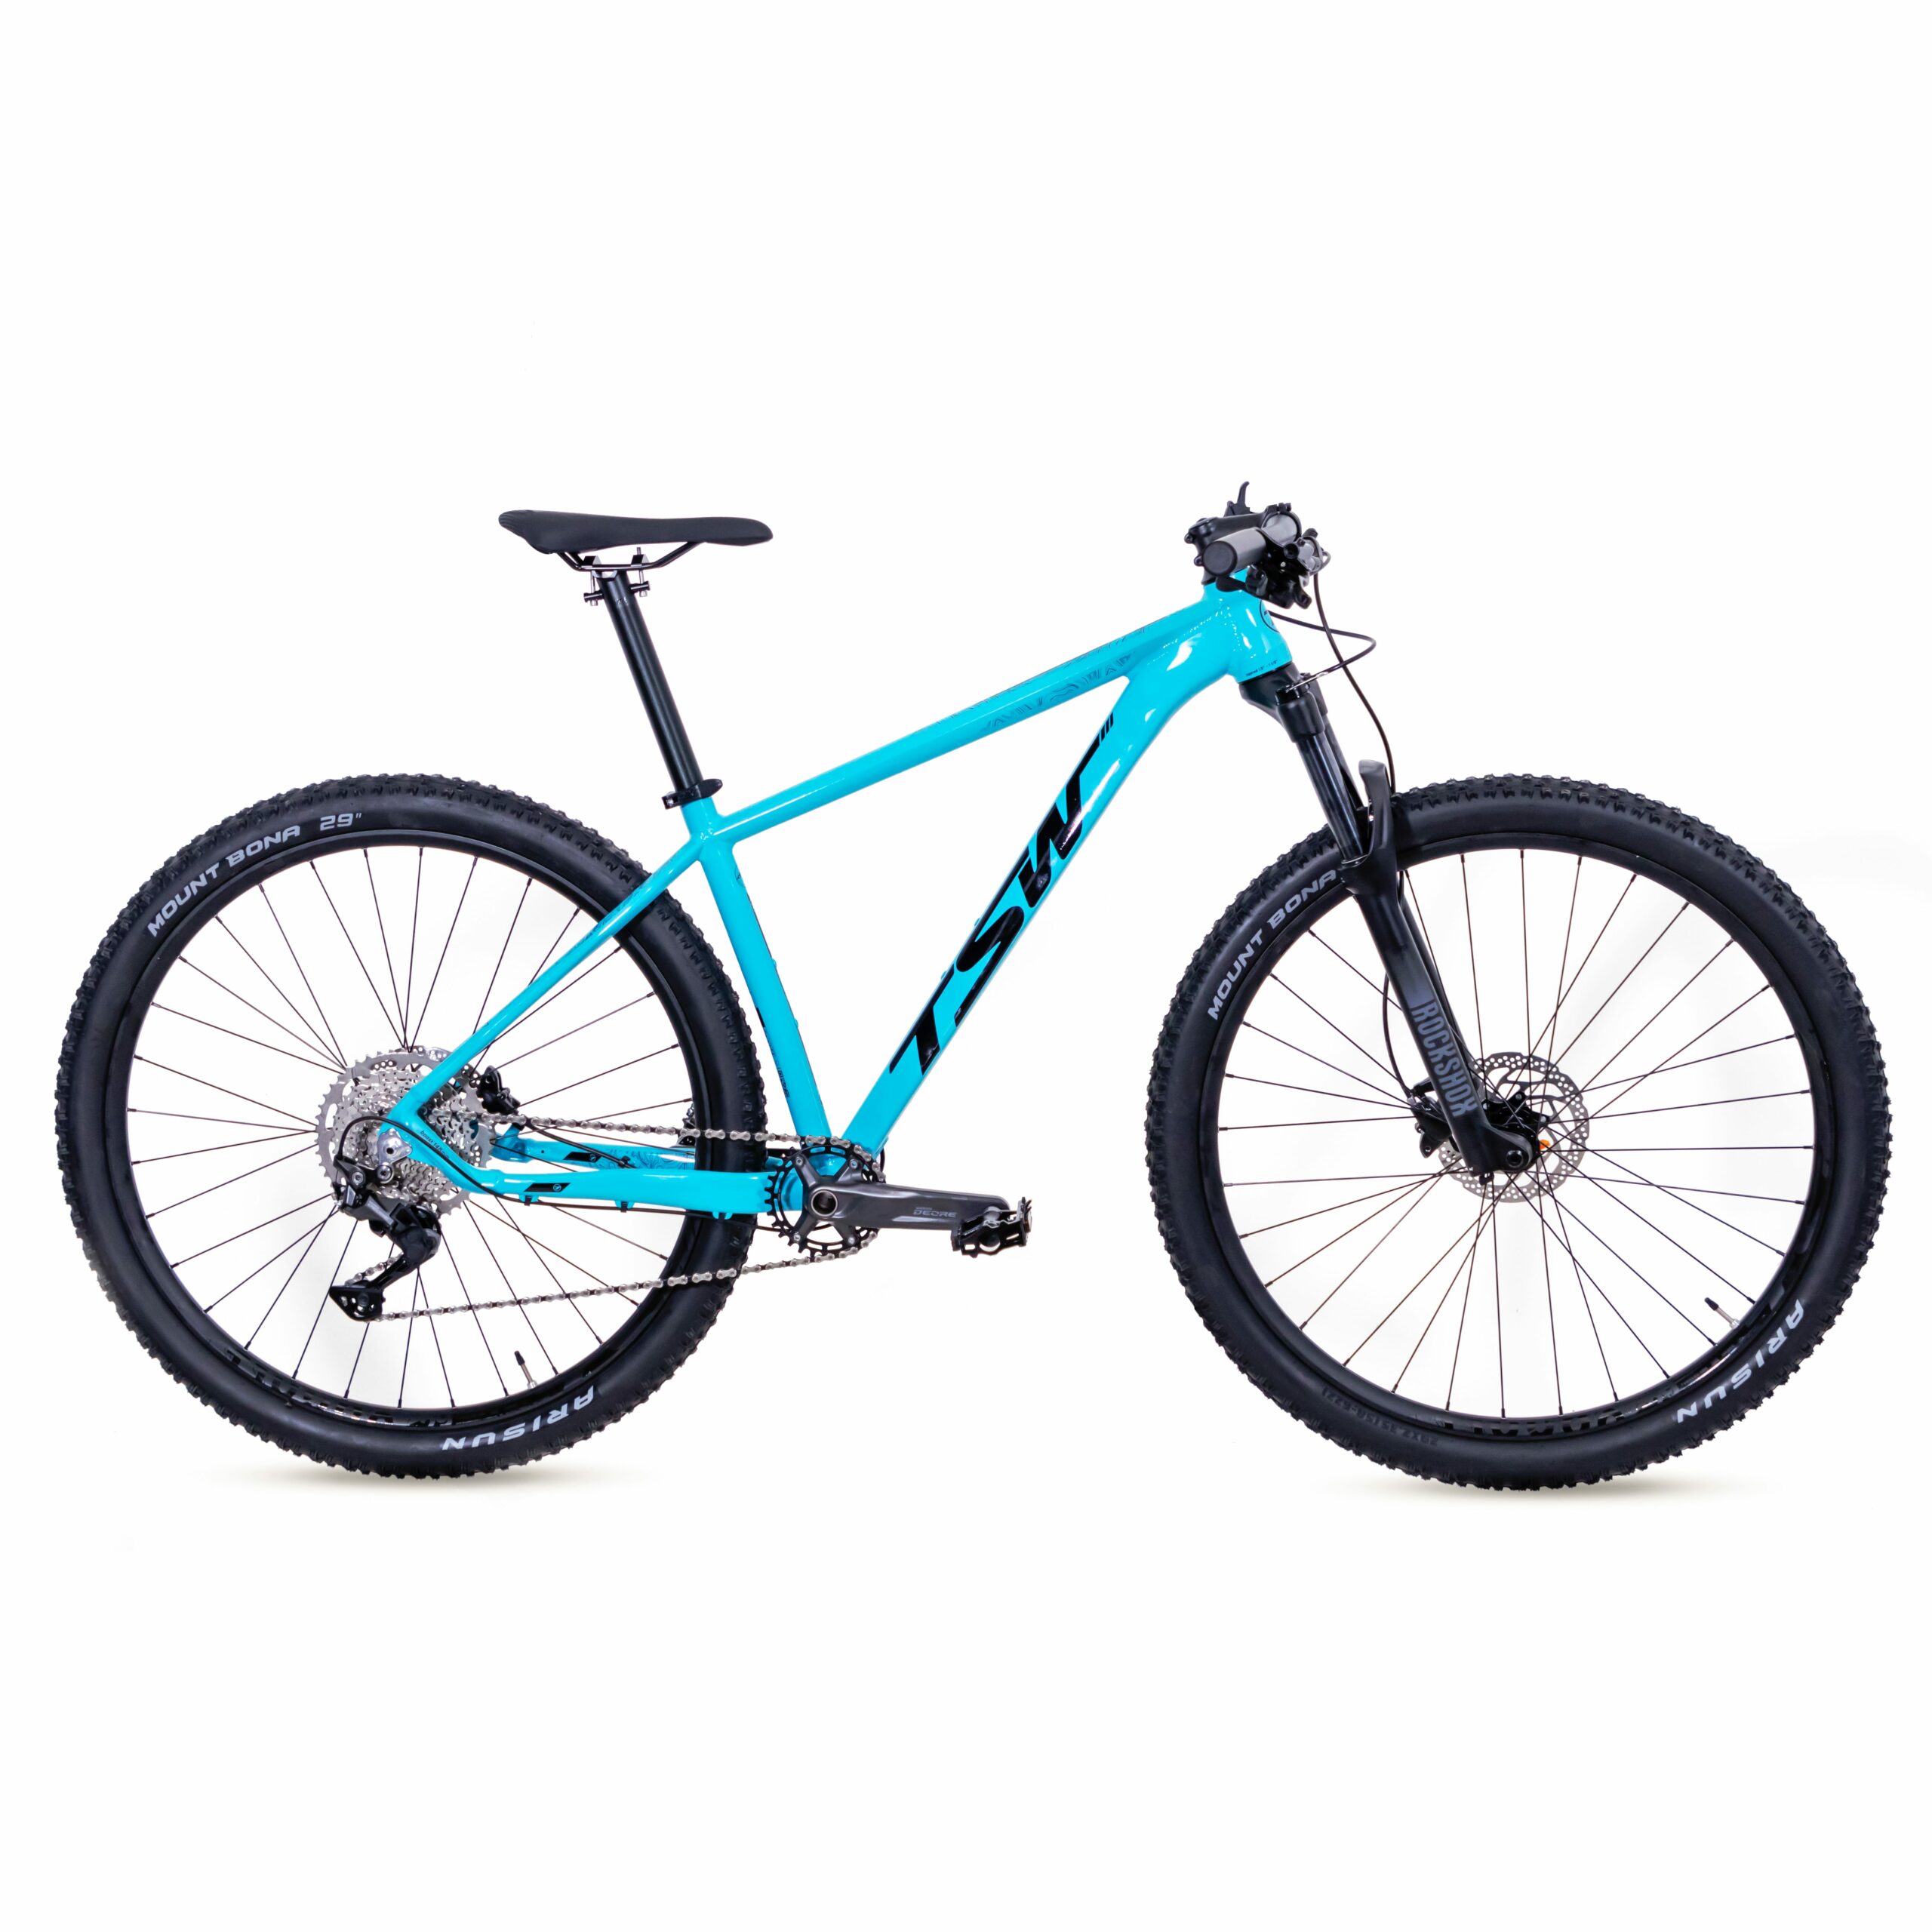 Bicicleta TSW Yukon | SH-10 | 2021/2022 - 15.5", Azul/Preto